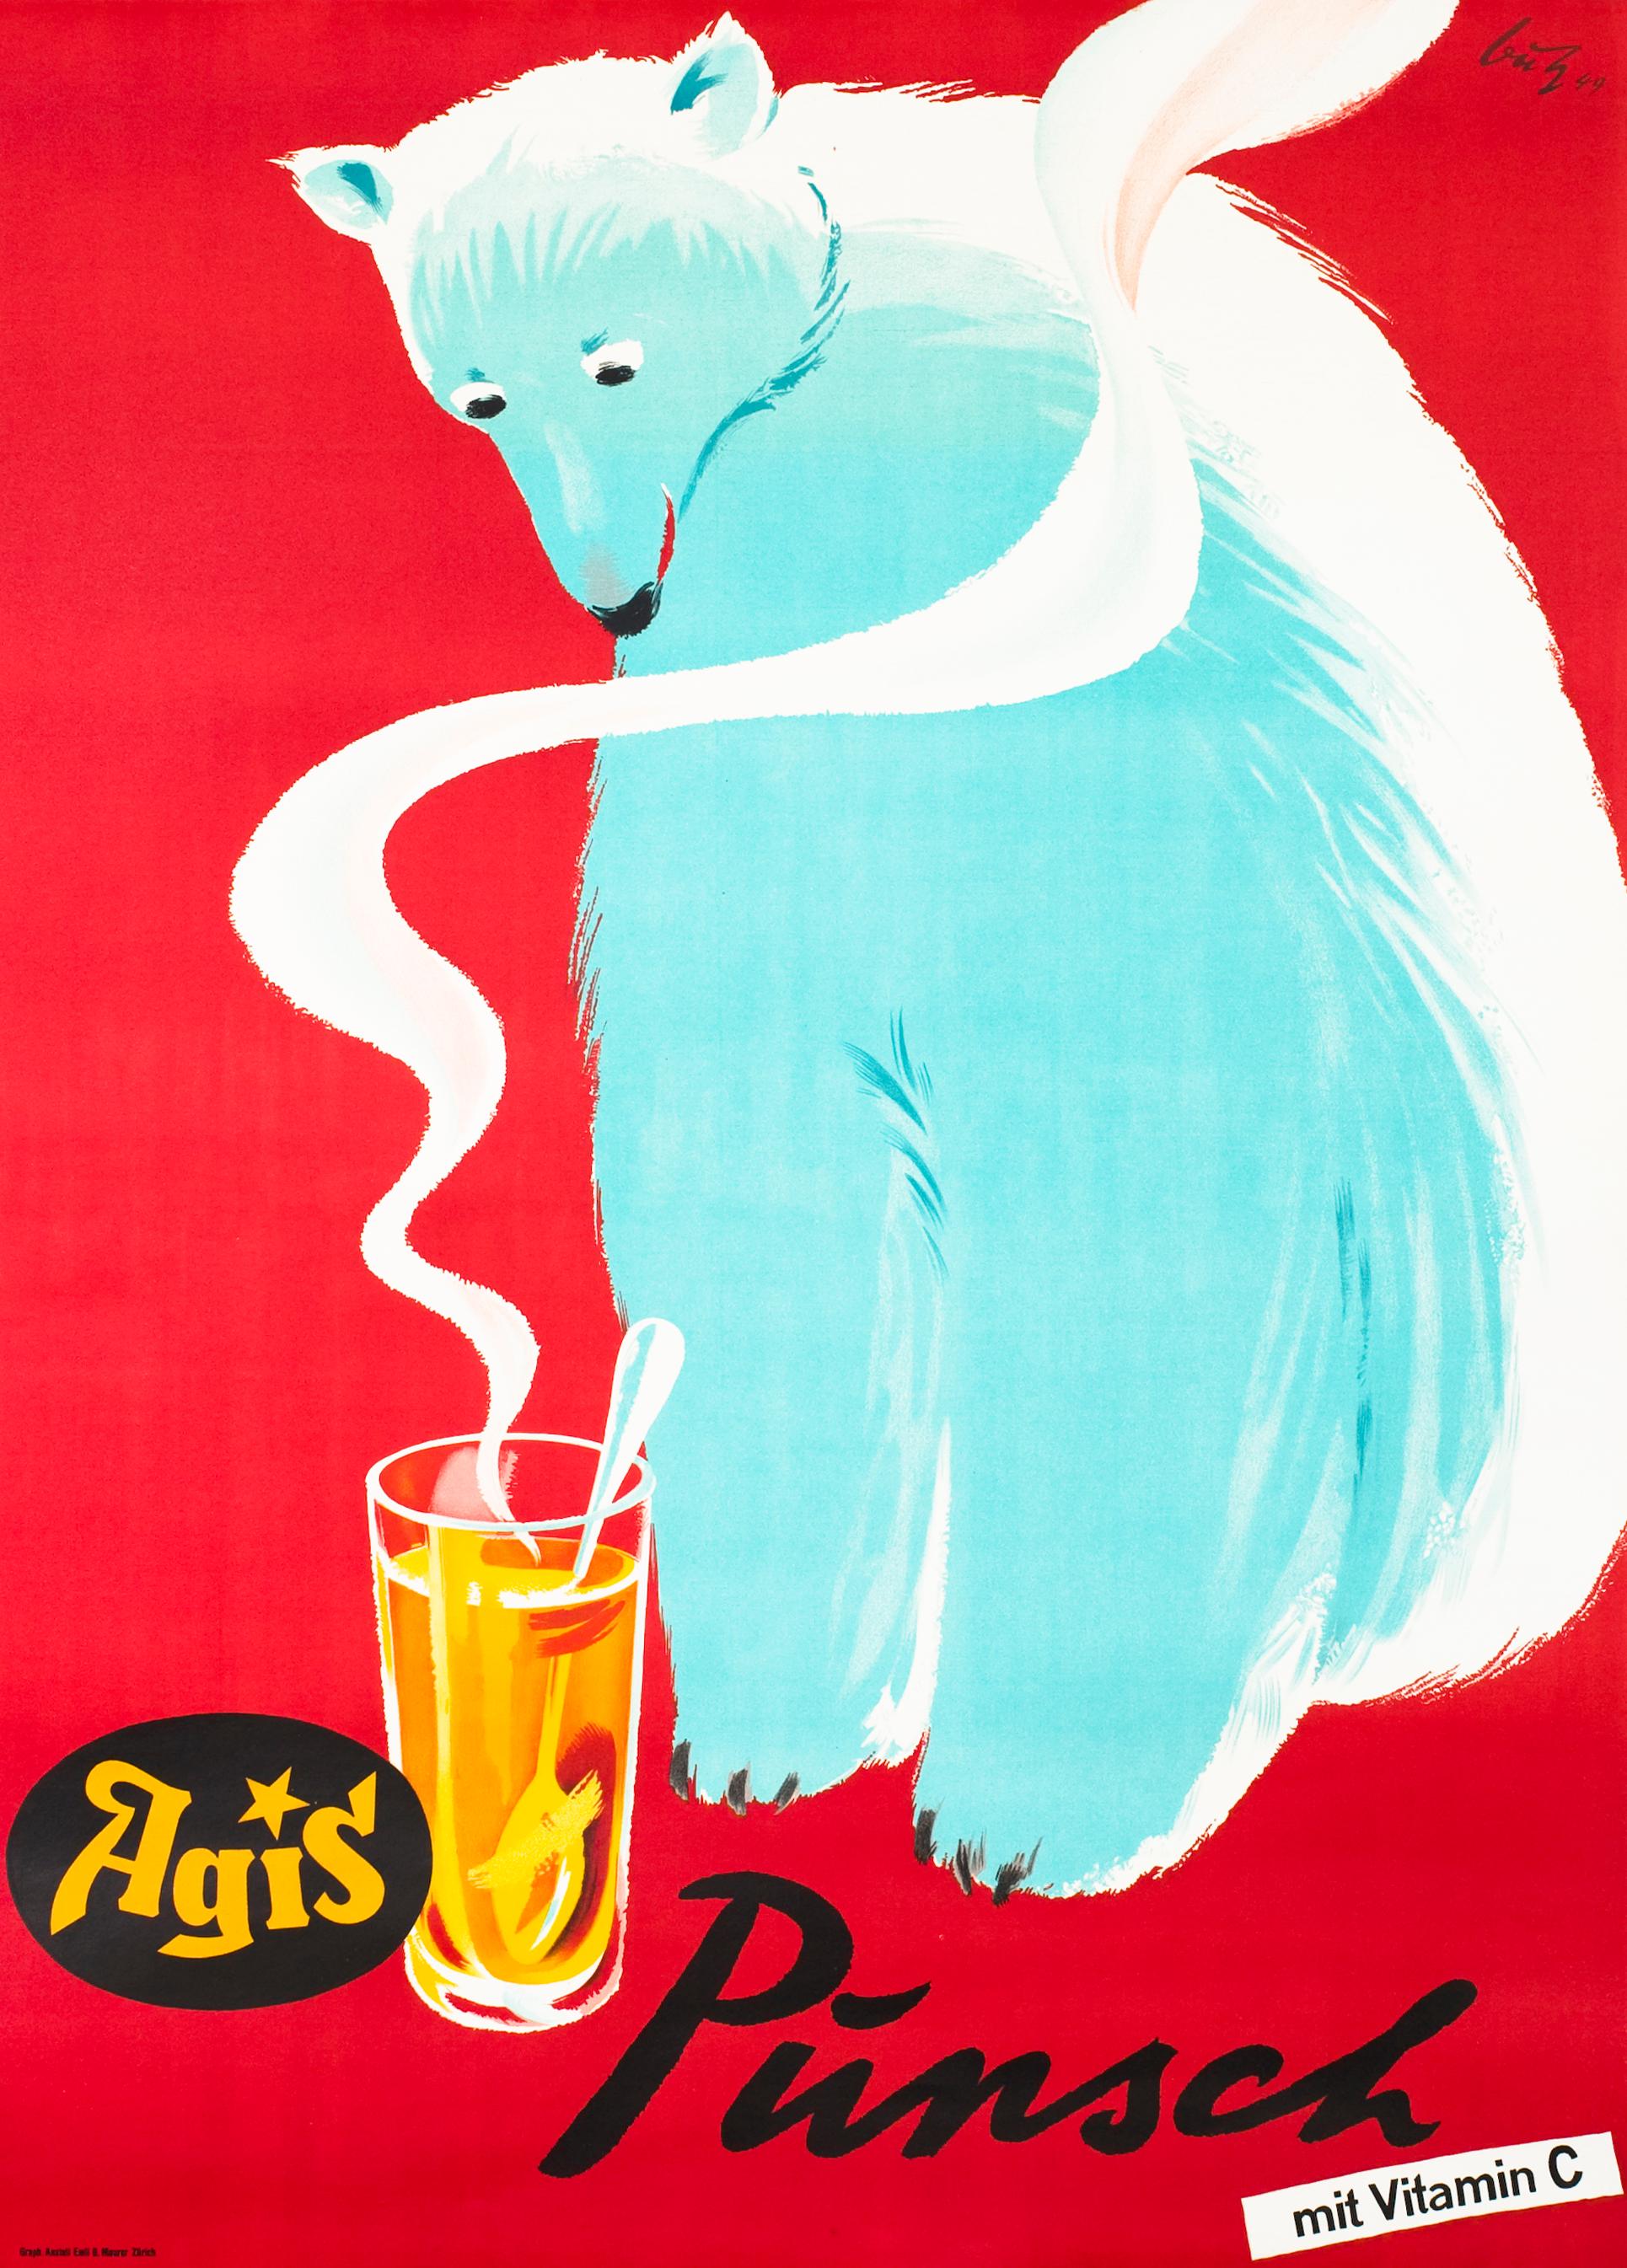 Fritz Bühler Animal Print - Agis Punsch mit Vitamin C